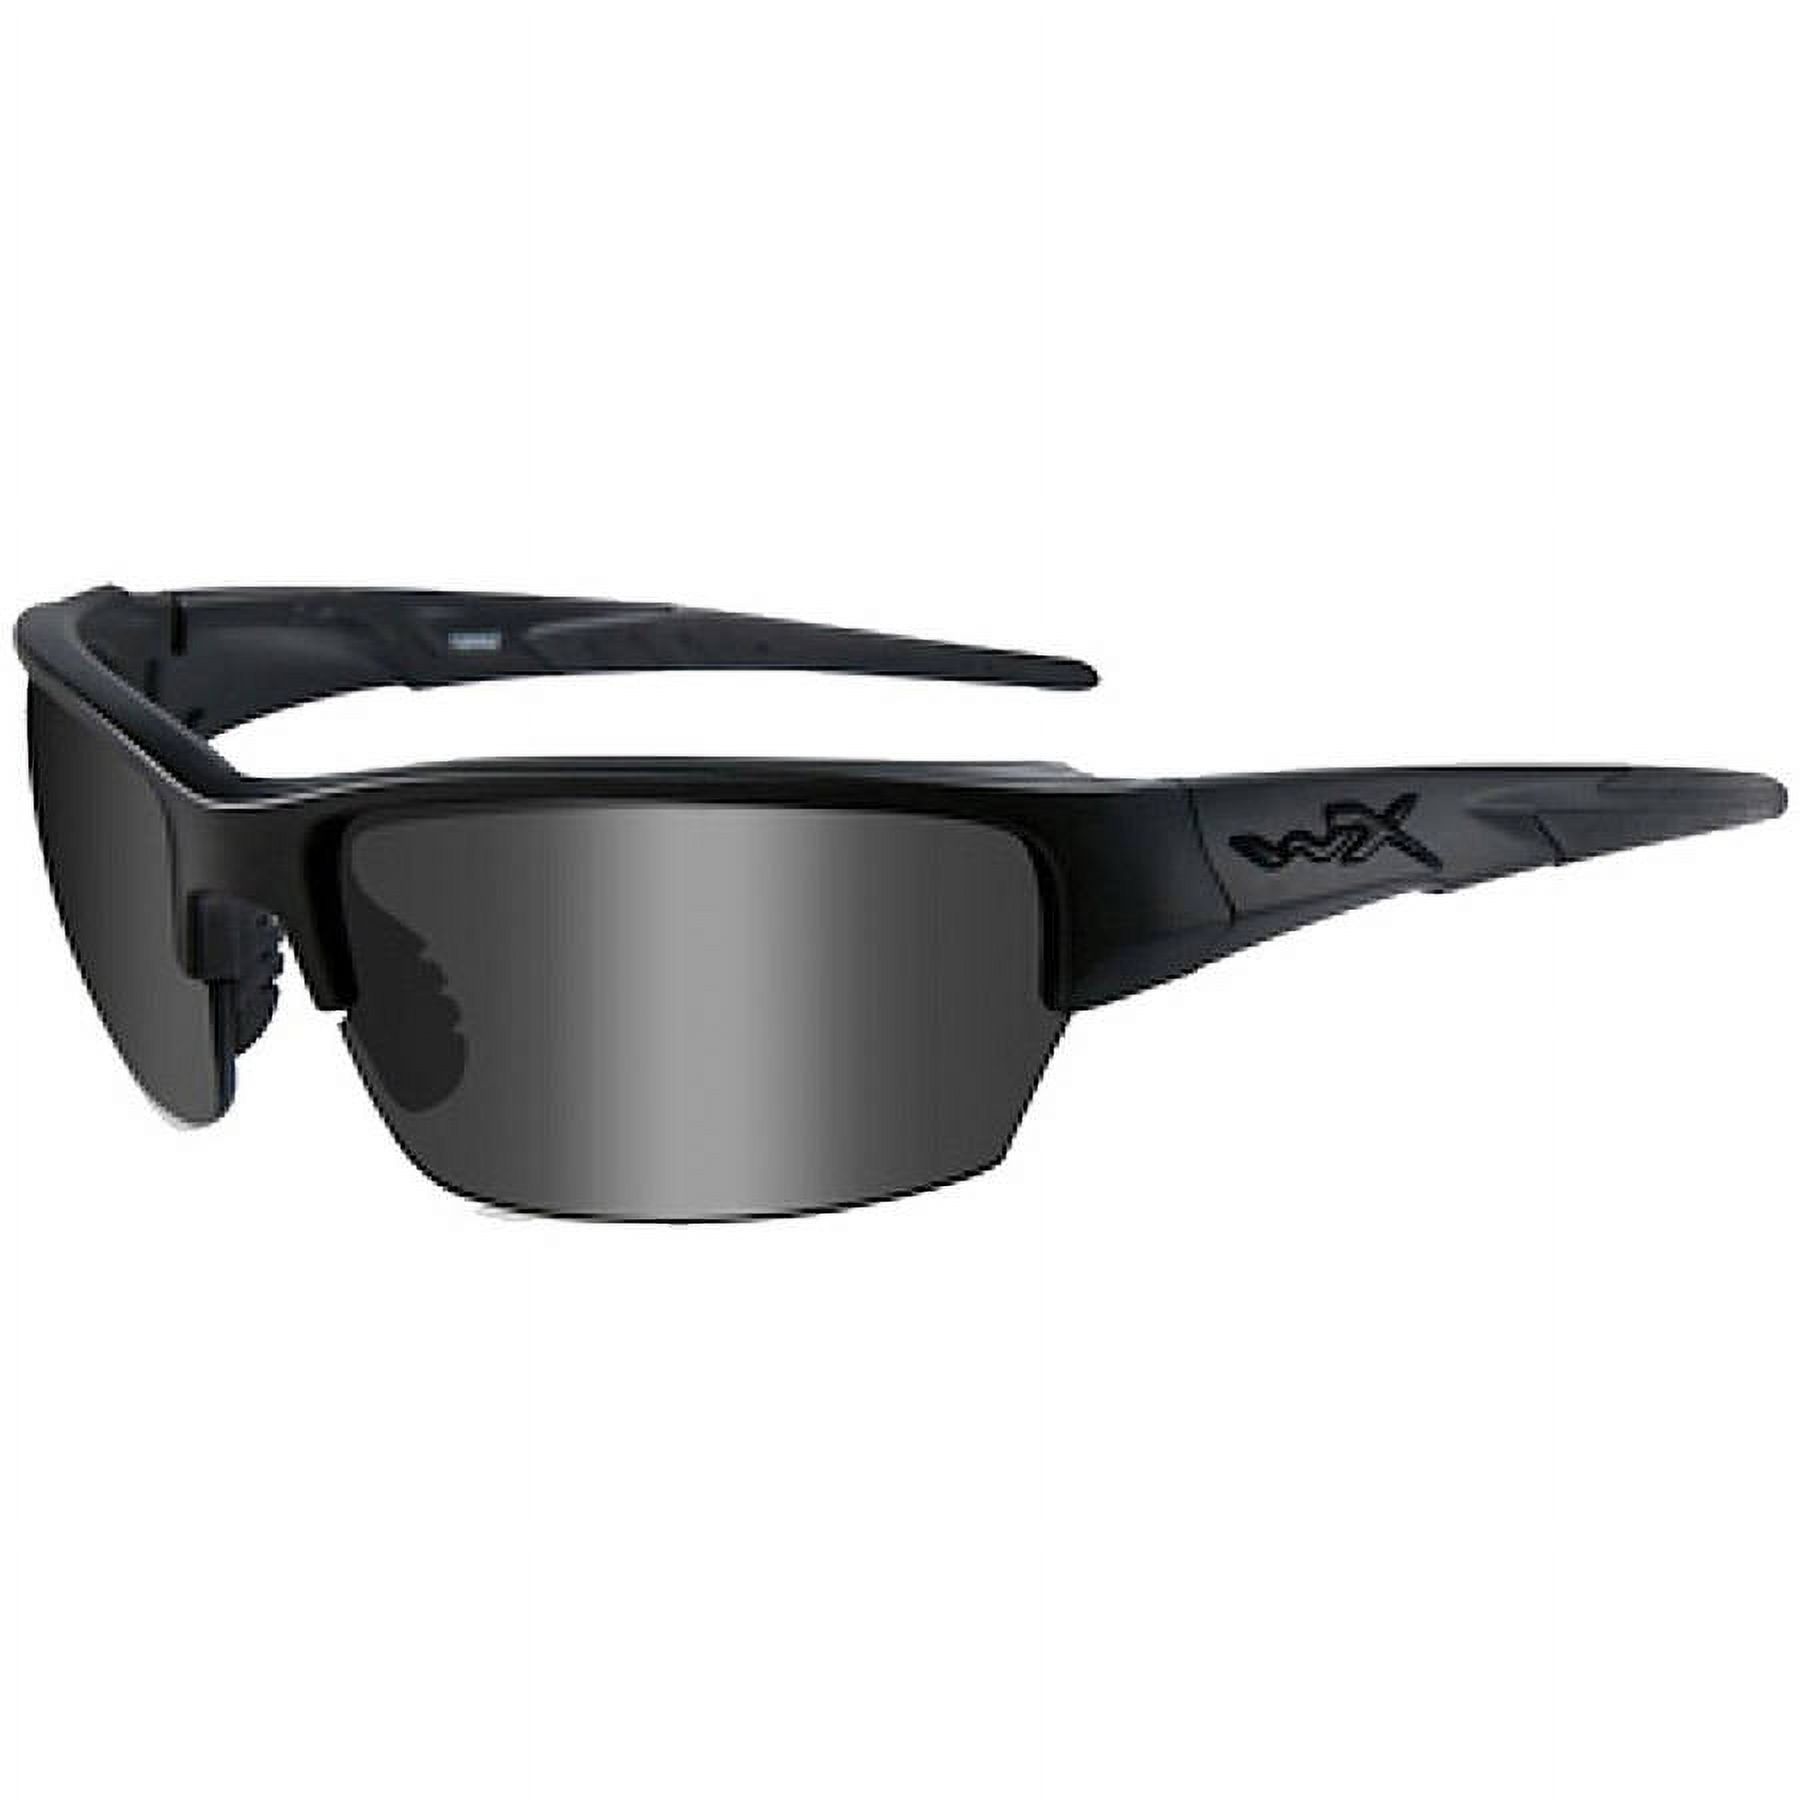 Wiley X WX Saint Sunglasses, Smoke Grey Lens / Black Ops Matte Black Frame - CHSAI08 - image 2 of 2